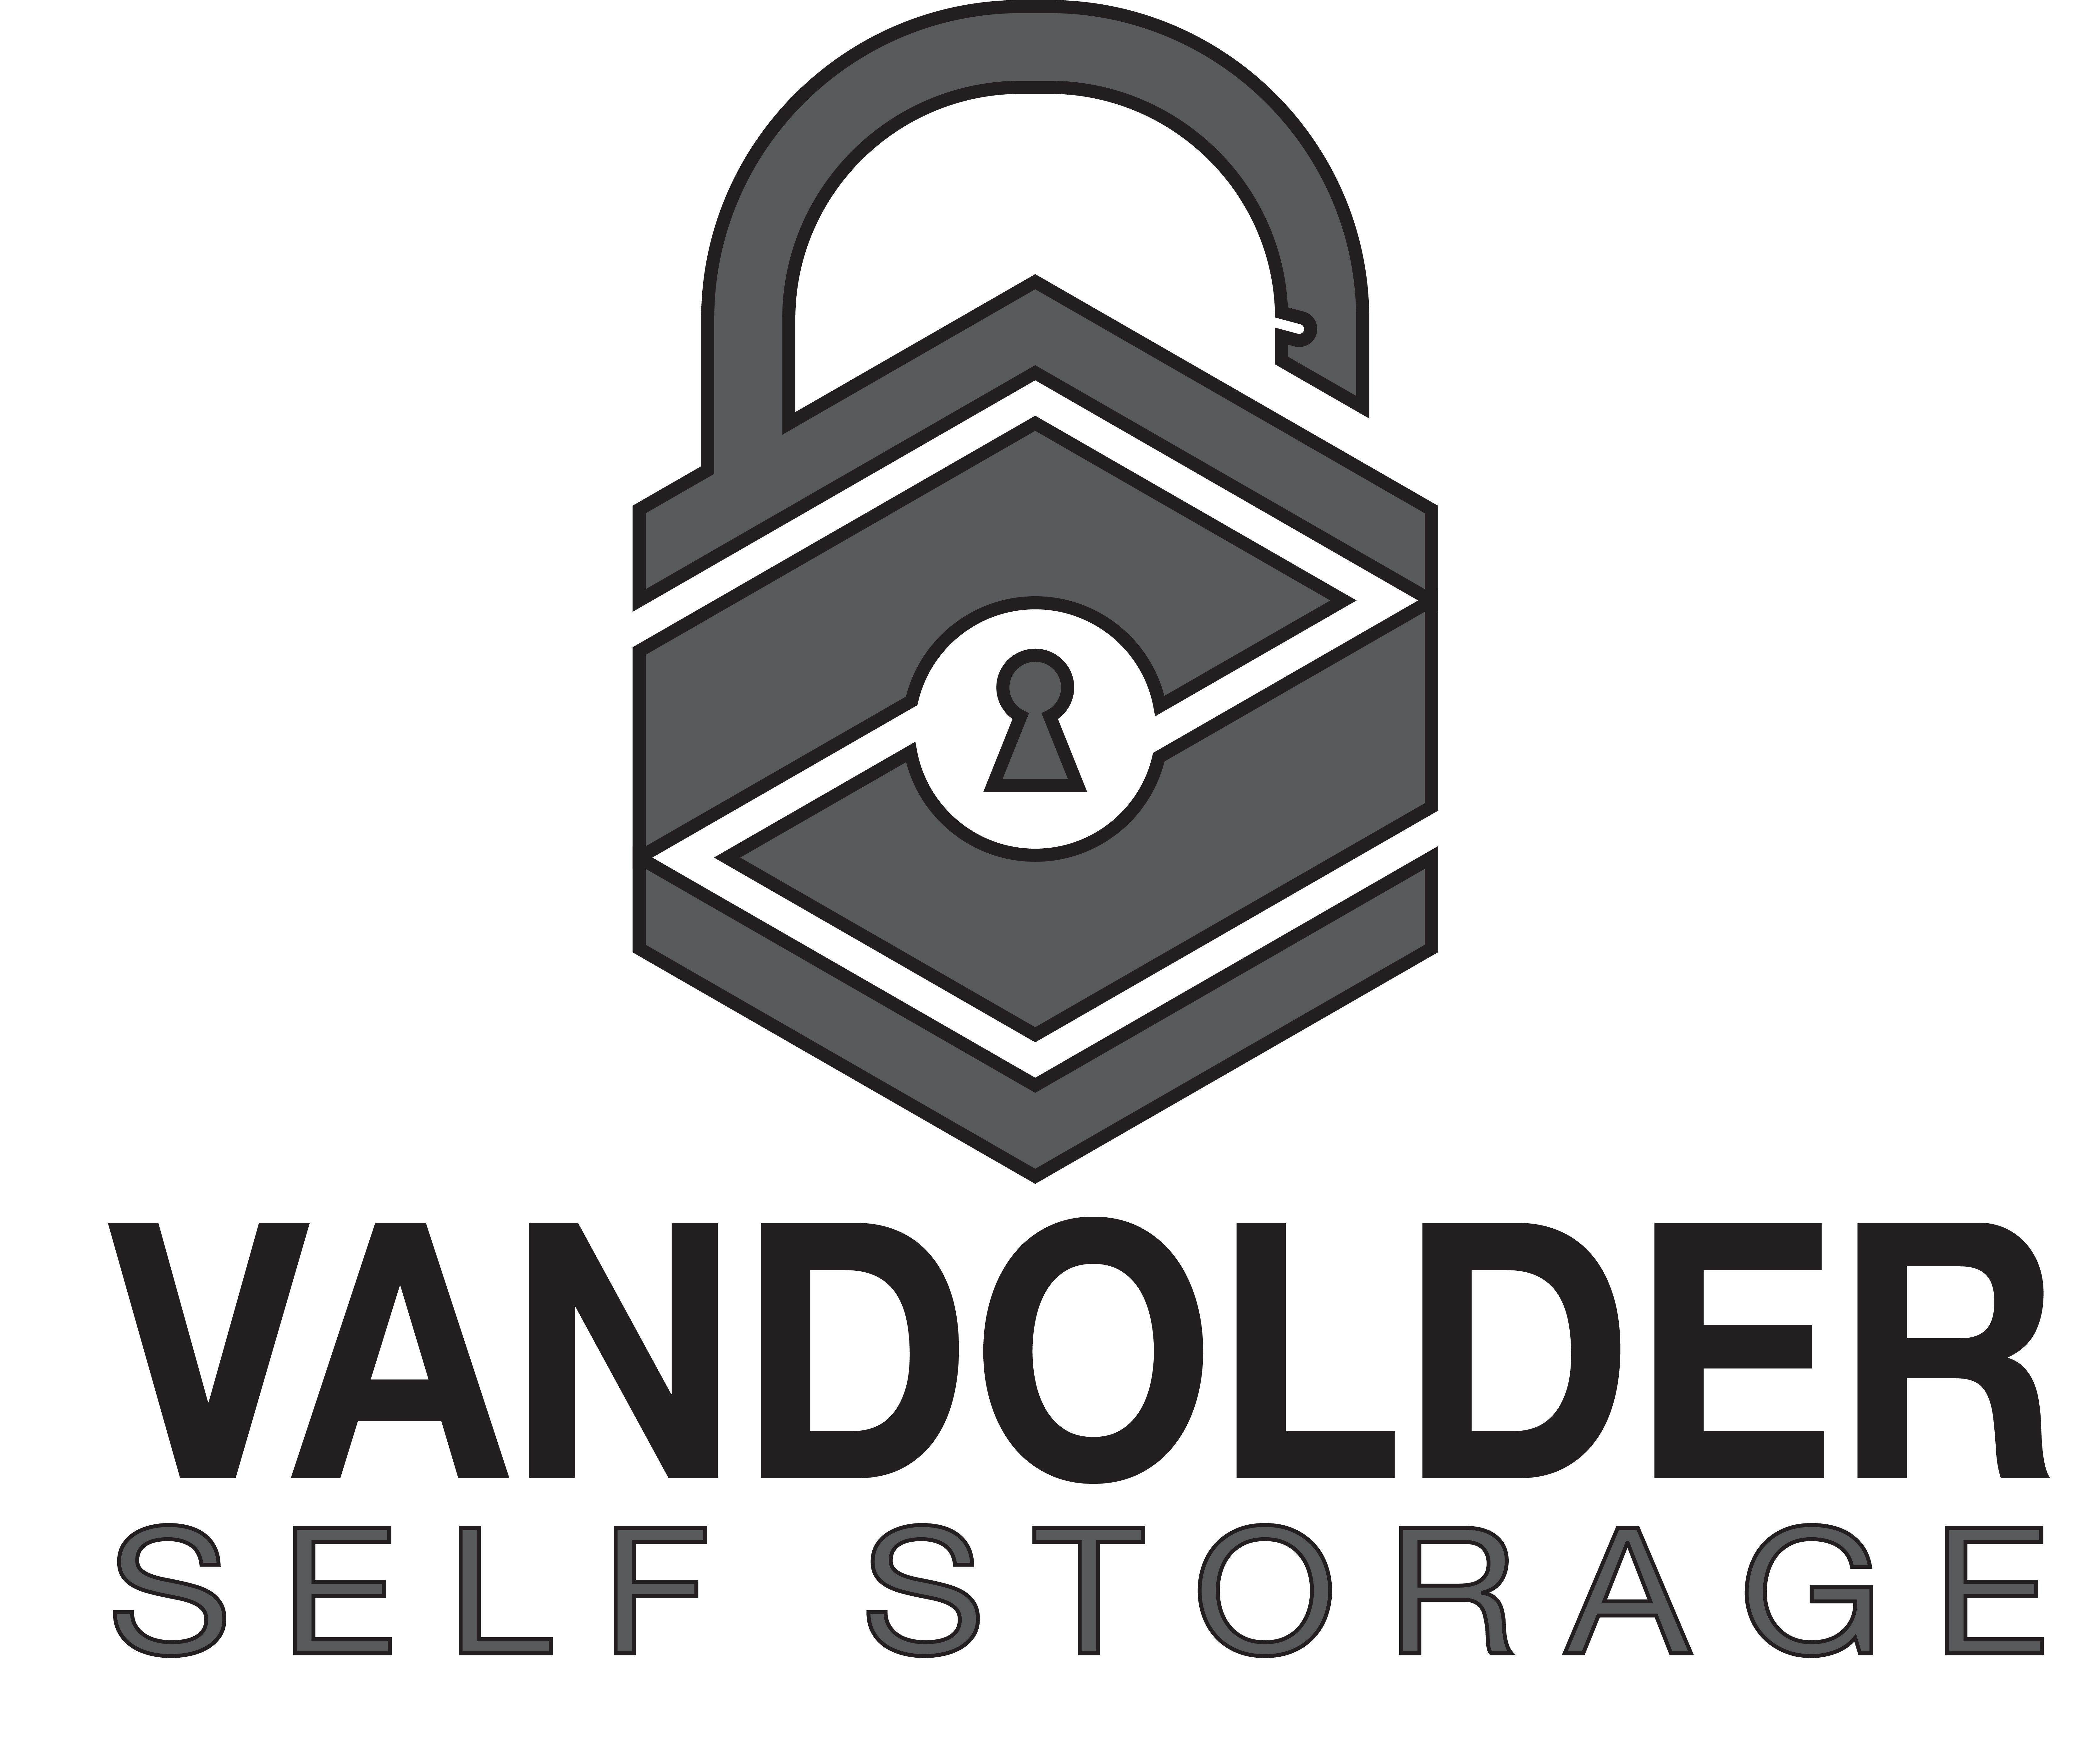 Vandolder Self Storage Logo